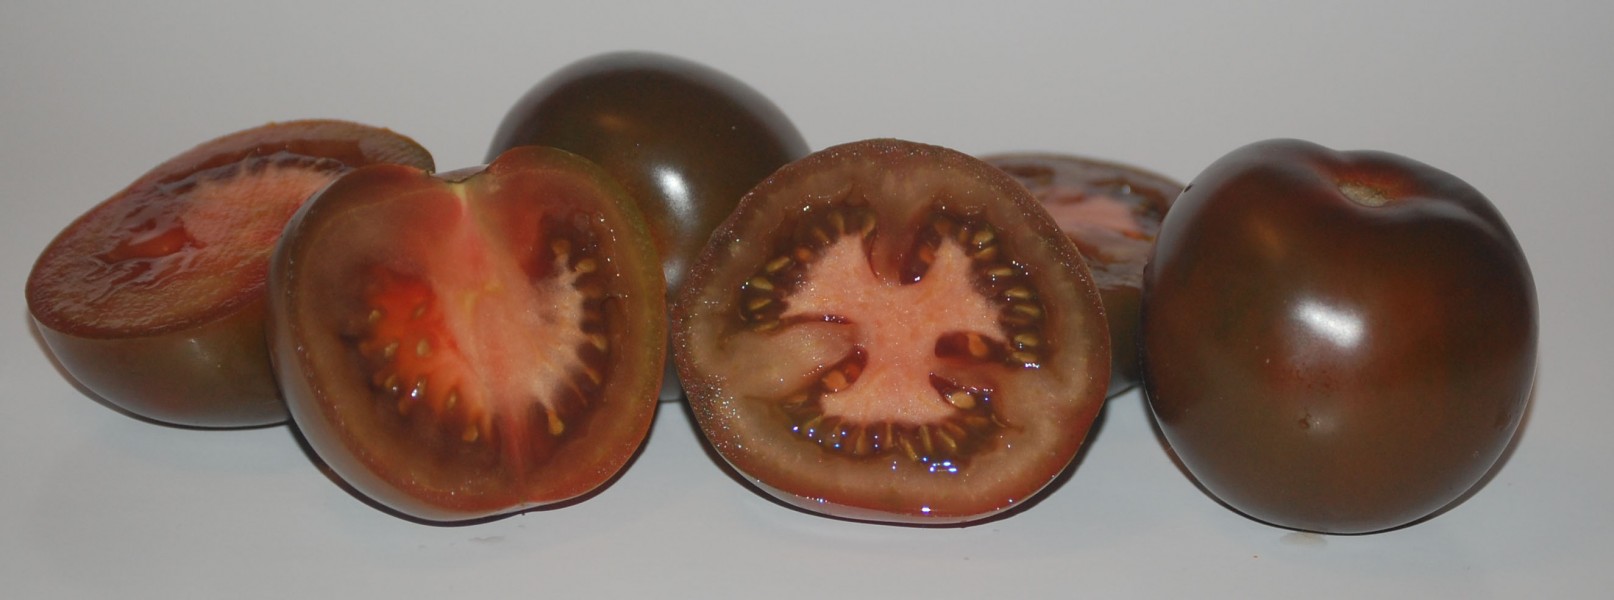 Kumato, a special breeding of tomatoes